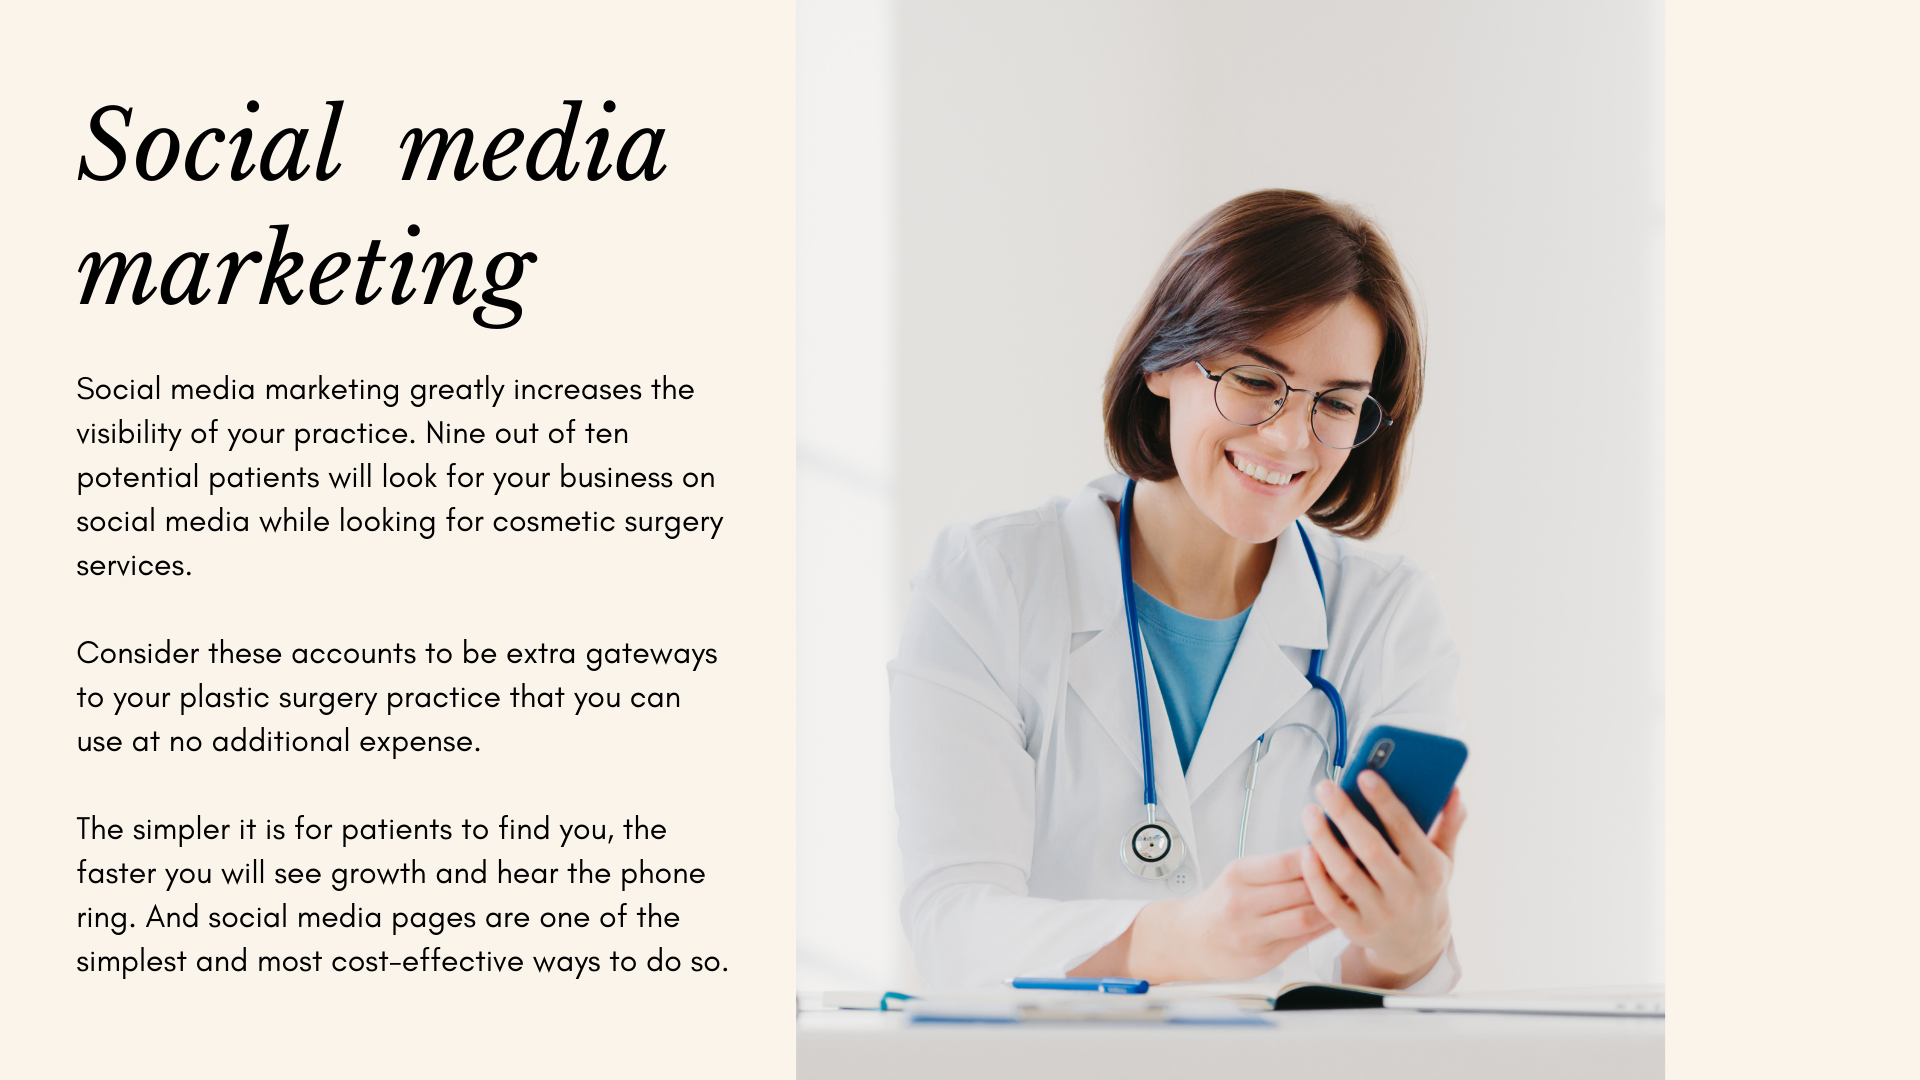 Mark your plastic surgery practice’s presence on Social Media Platforms